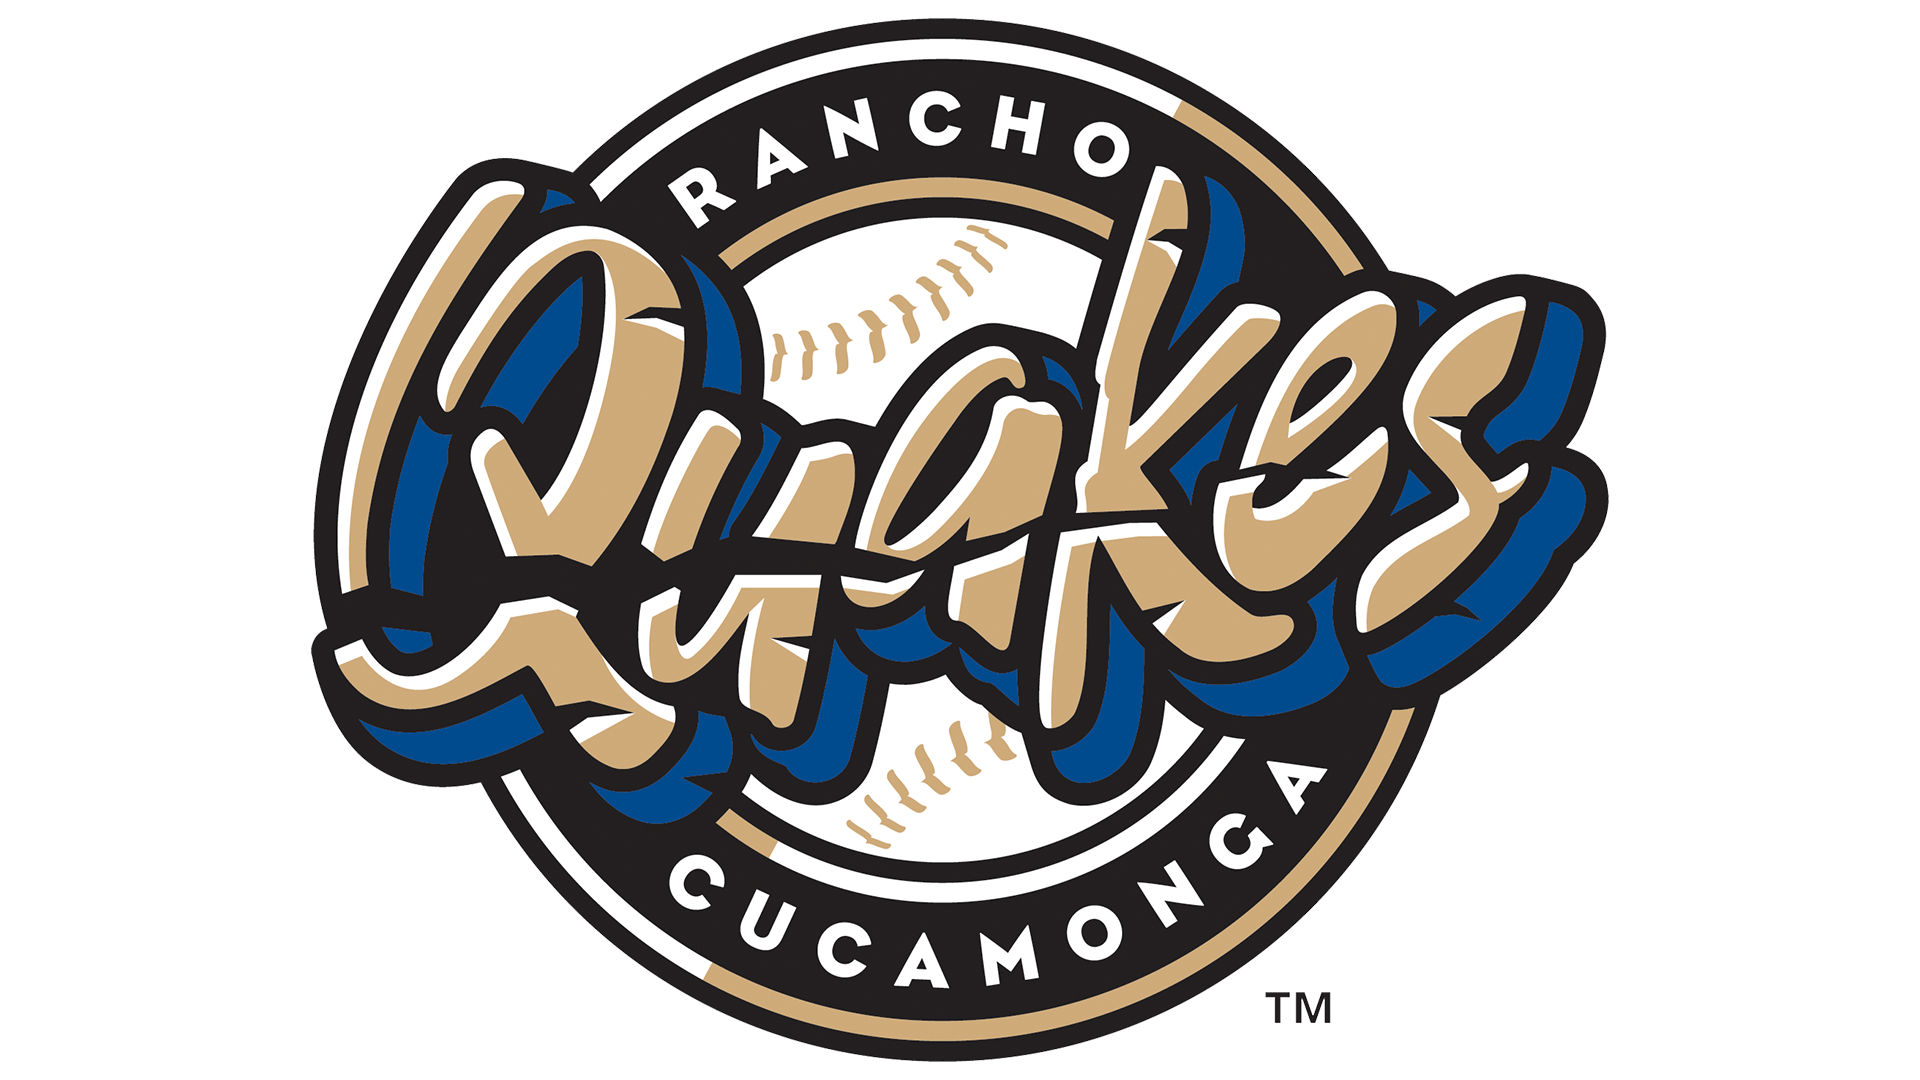 Tonight, we're - Rancho Cucamonga Quakes Baseball